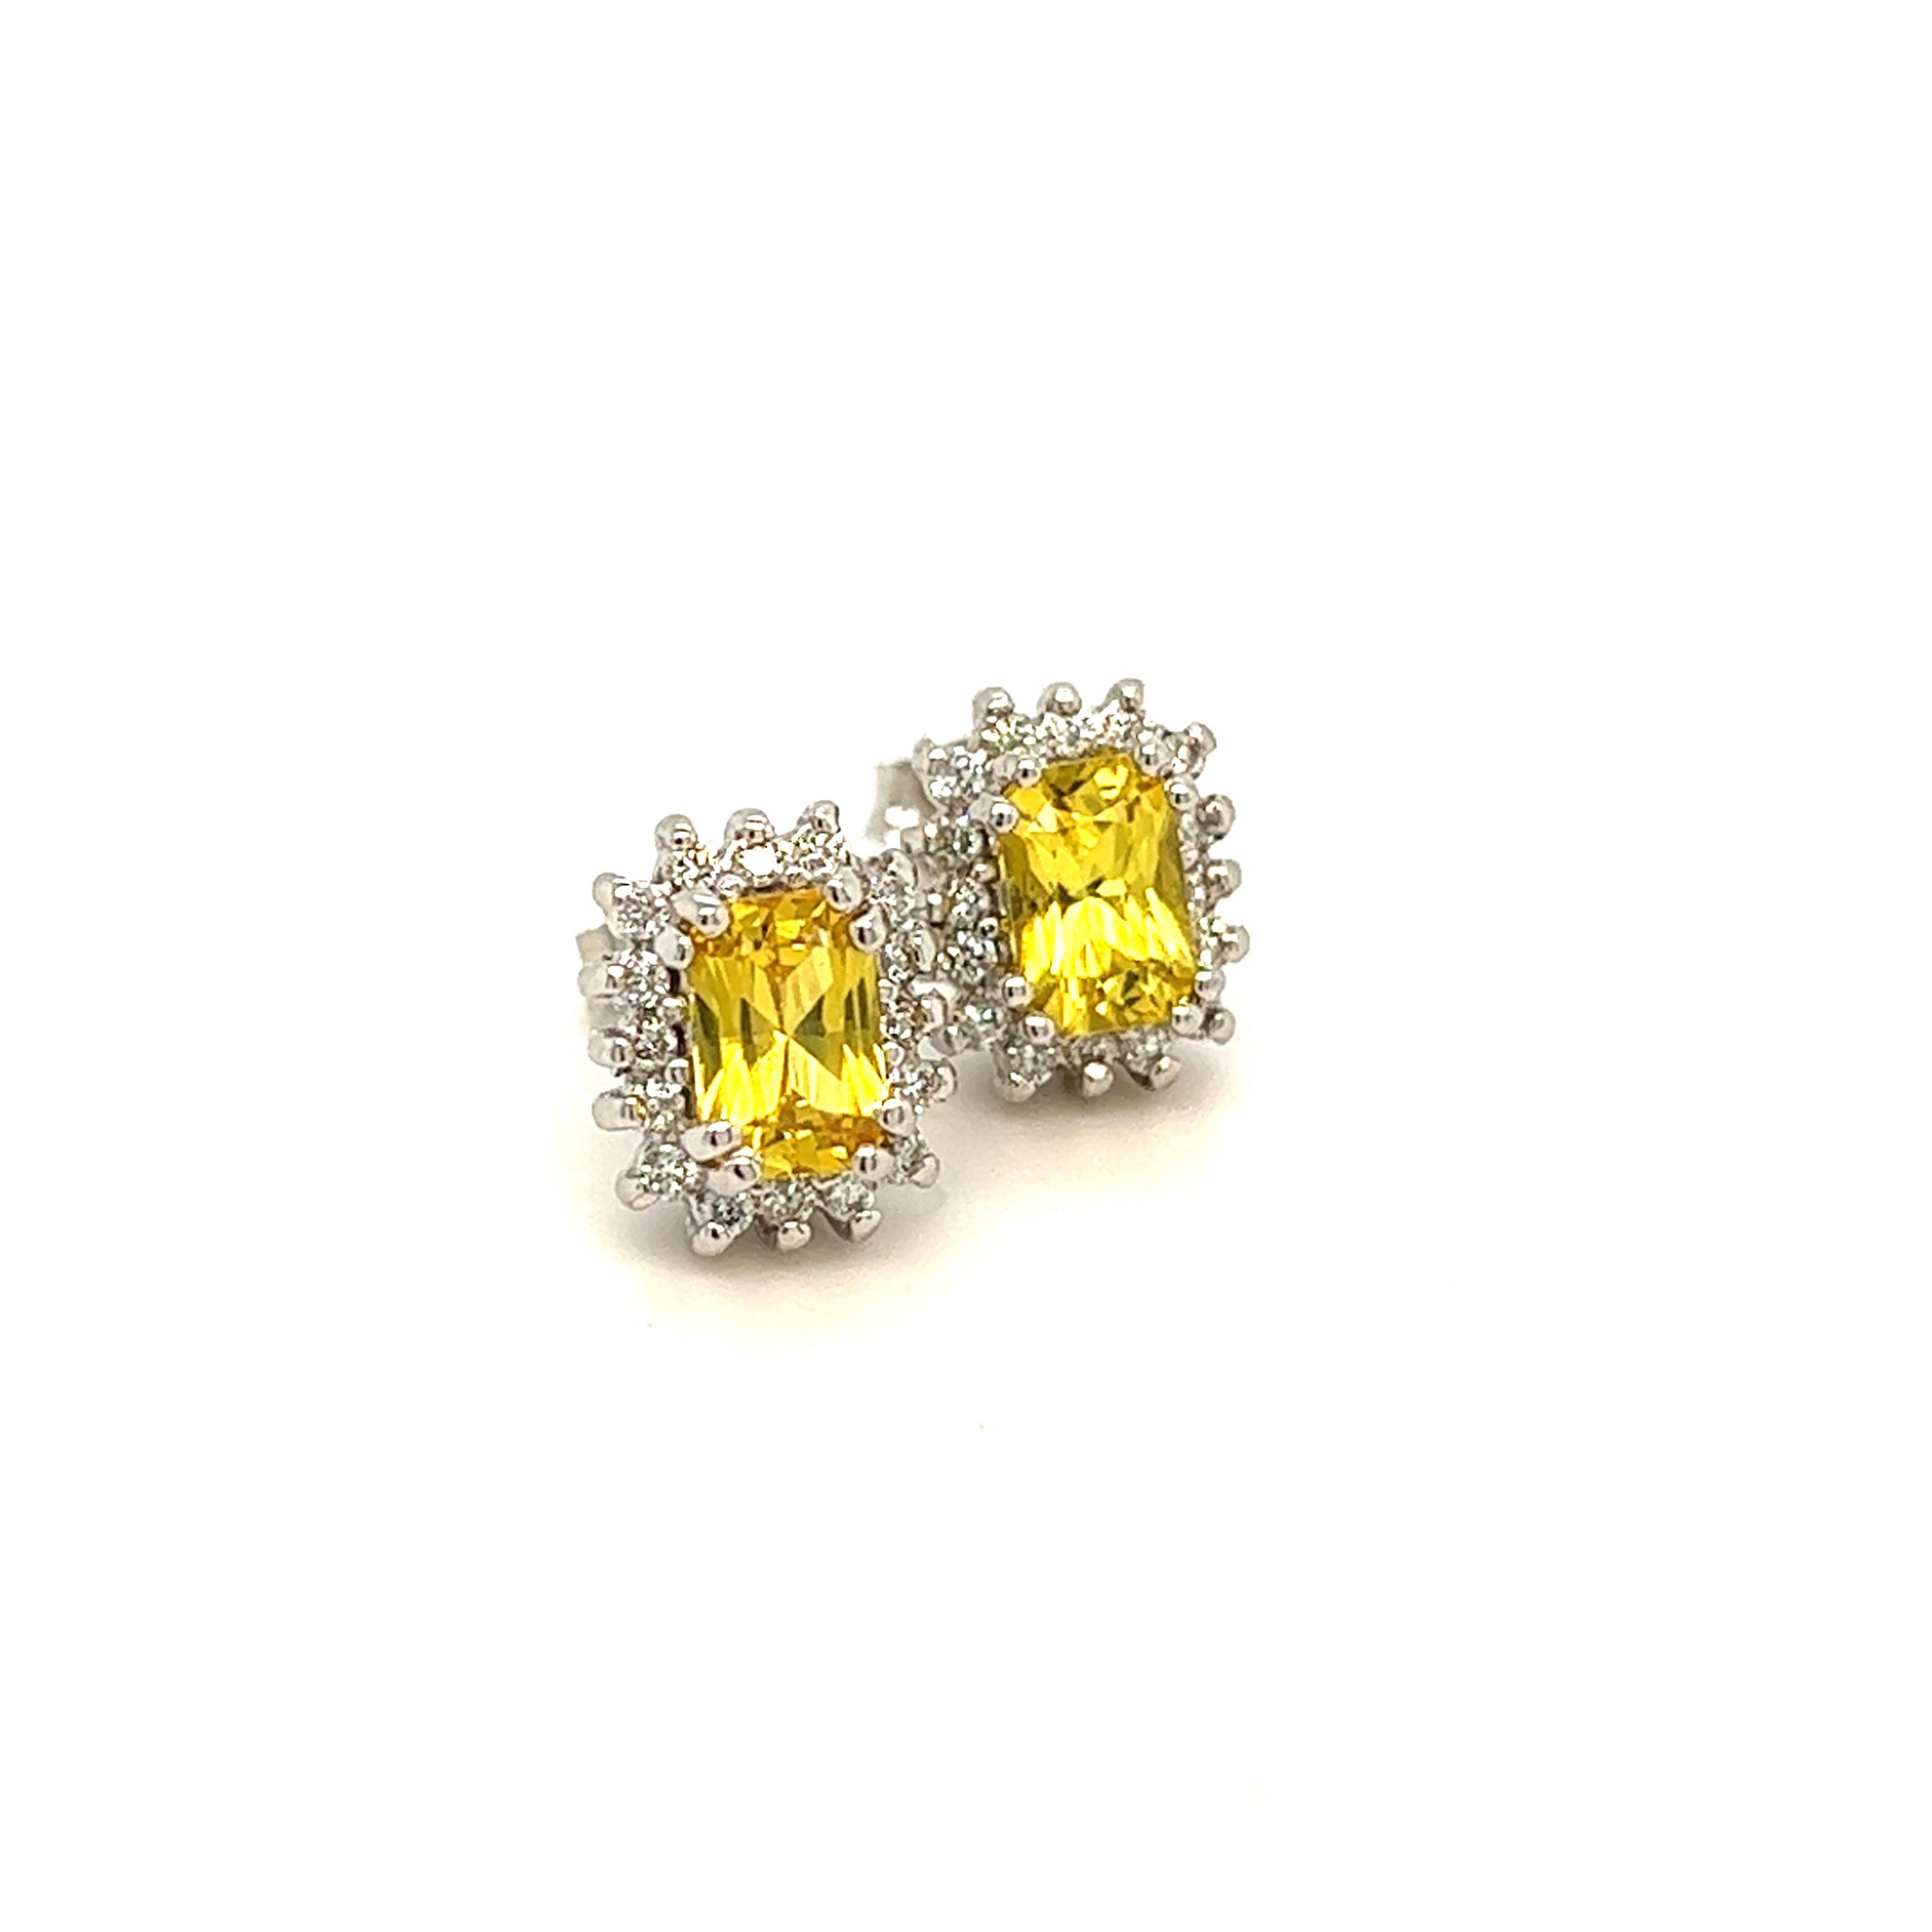 Natural Sapphire Diamond Stud Earrings 14k W Gold 1.71 TCW Certified $2950 121262